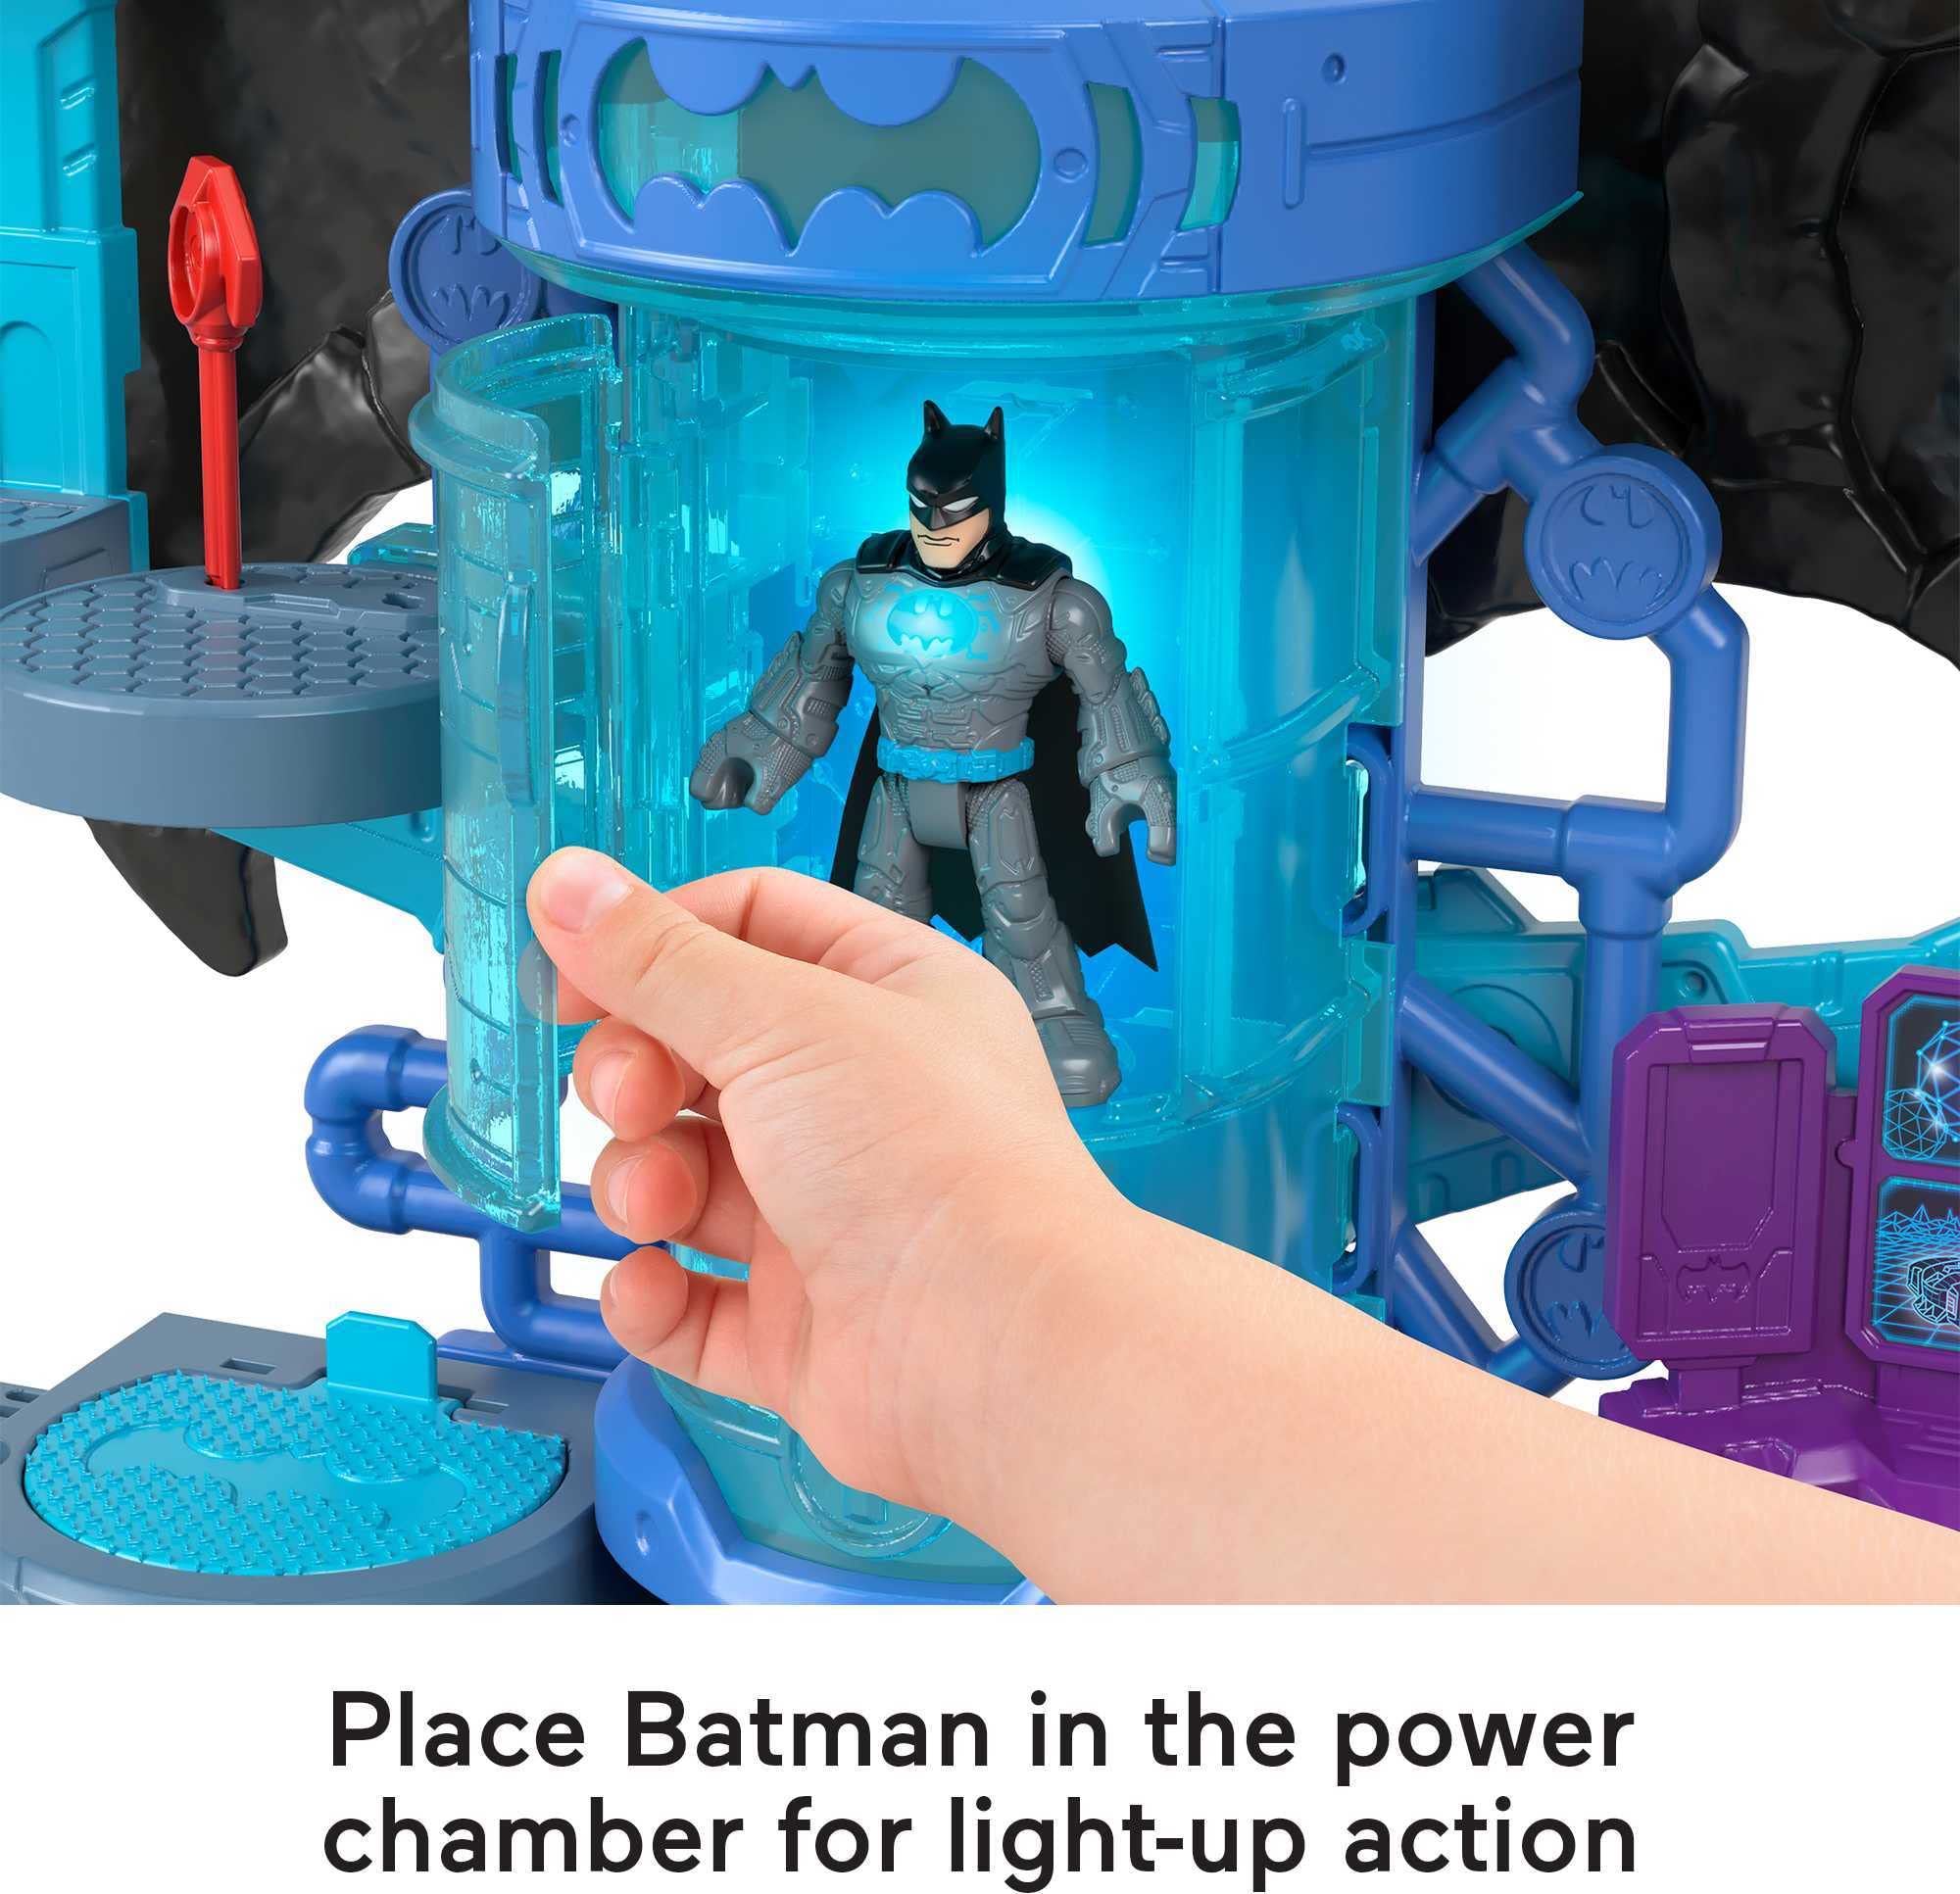 Fisher-Price DC Super Friends Imaginext Batman Figure and Bat-Tech Batcave Playset with Lights & Sounds for Preschool Pretend Play, 6 Play Pieces